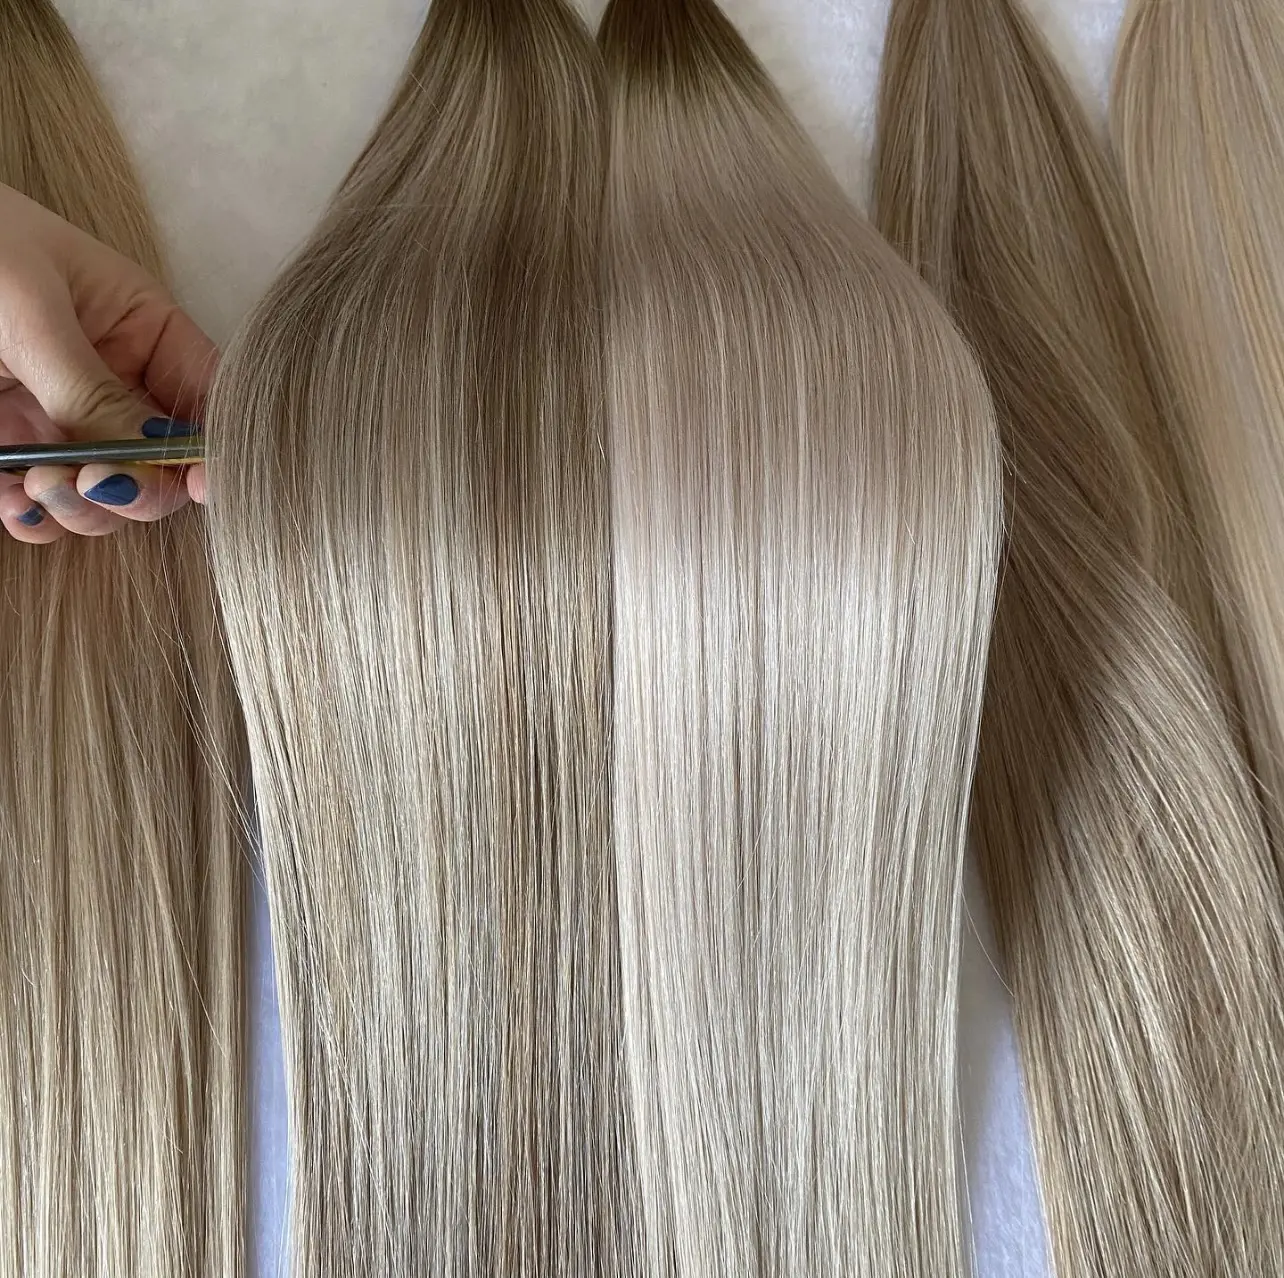 Toegevoegd Volume Authentieke Double Drawn Hand Gebonden Inslag Ethically Afkomstig Natuurlijke Blonde Russische Virgin Human Hair Extensions